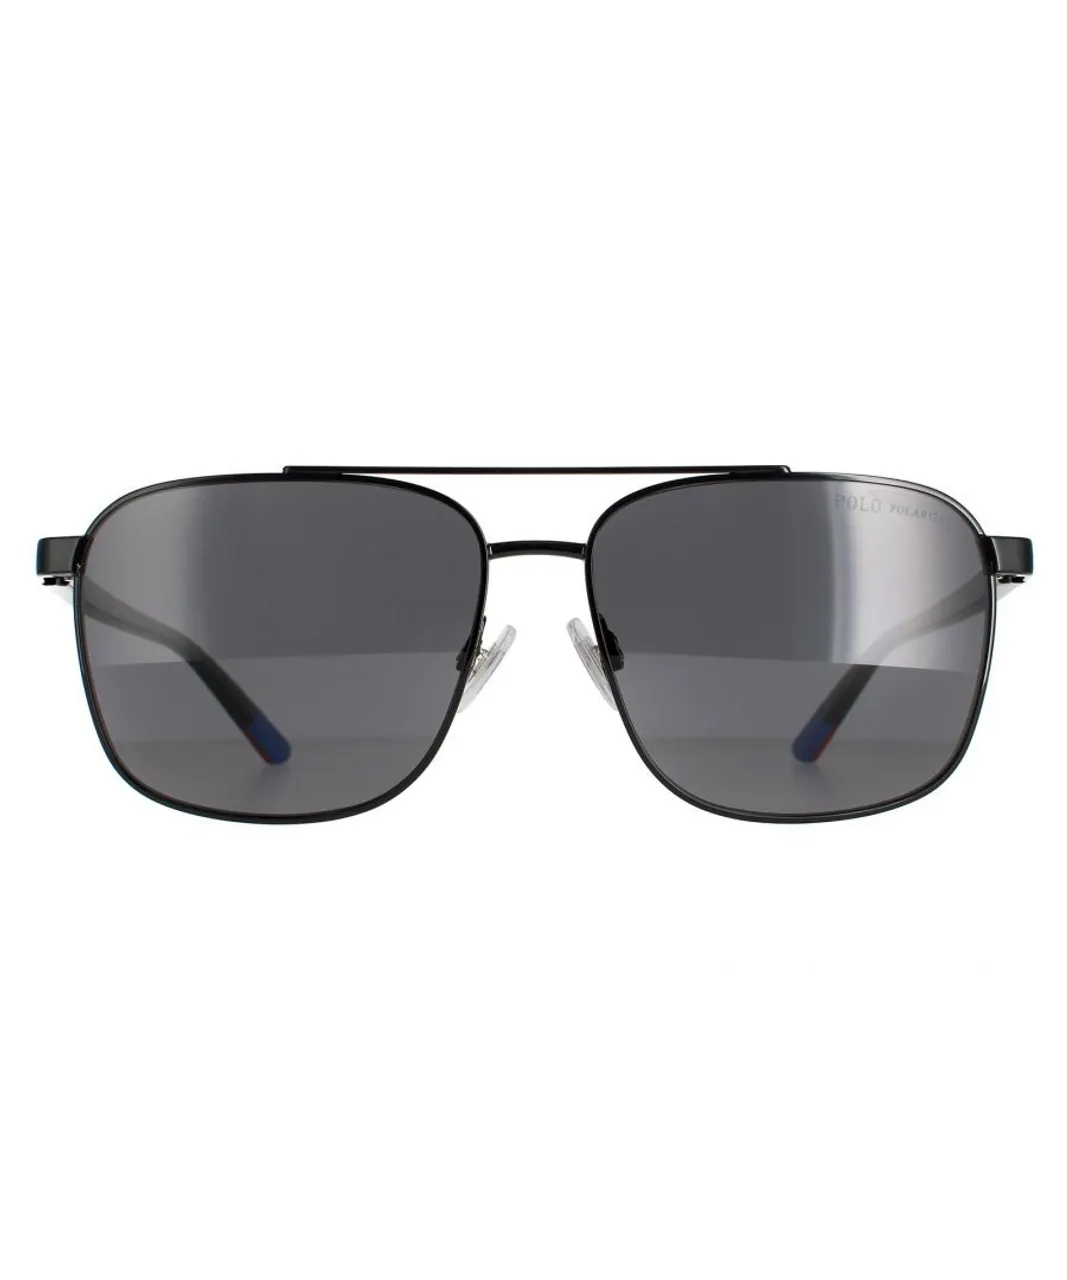 Polo Ralph Lauren Aviator Mens Shiny Black Grey Polarized Sunglasses - One